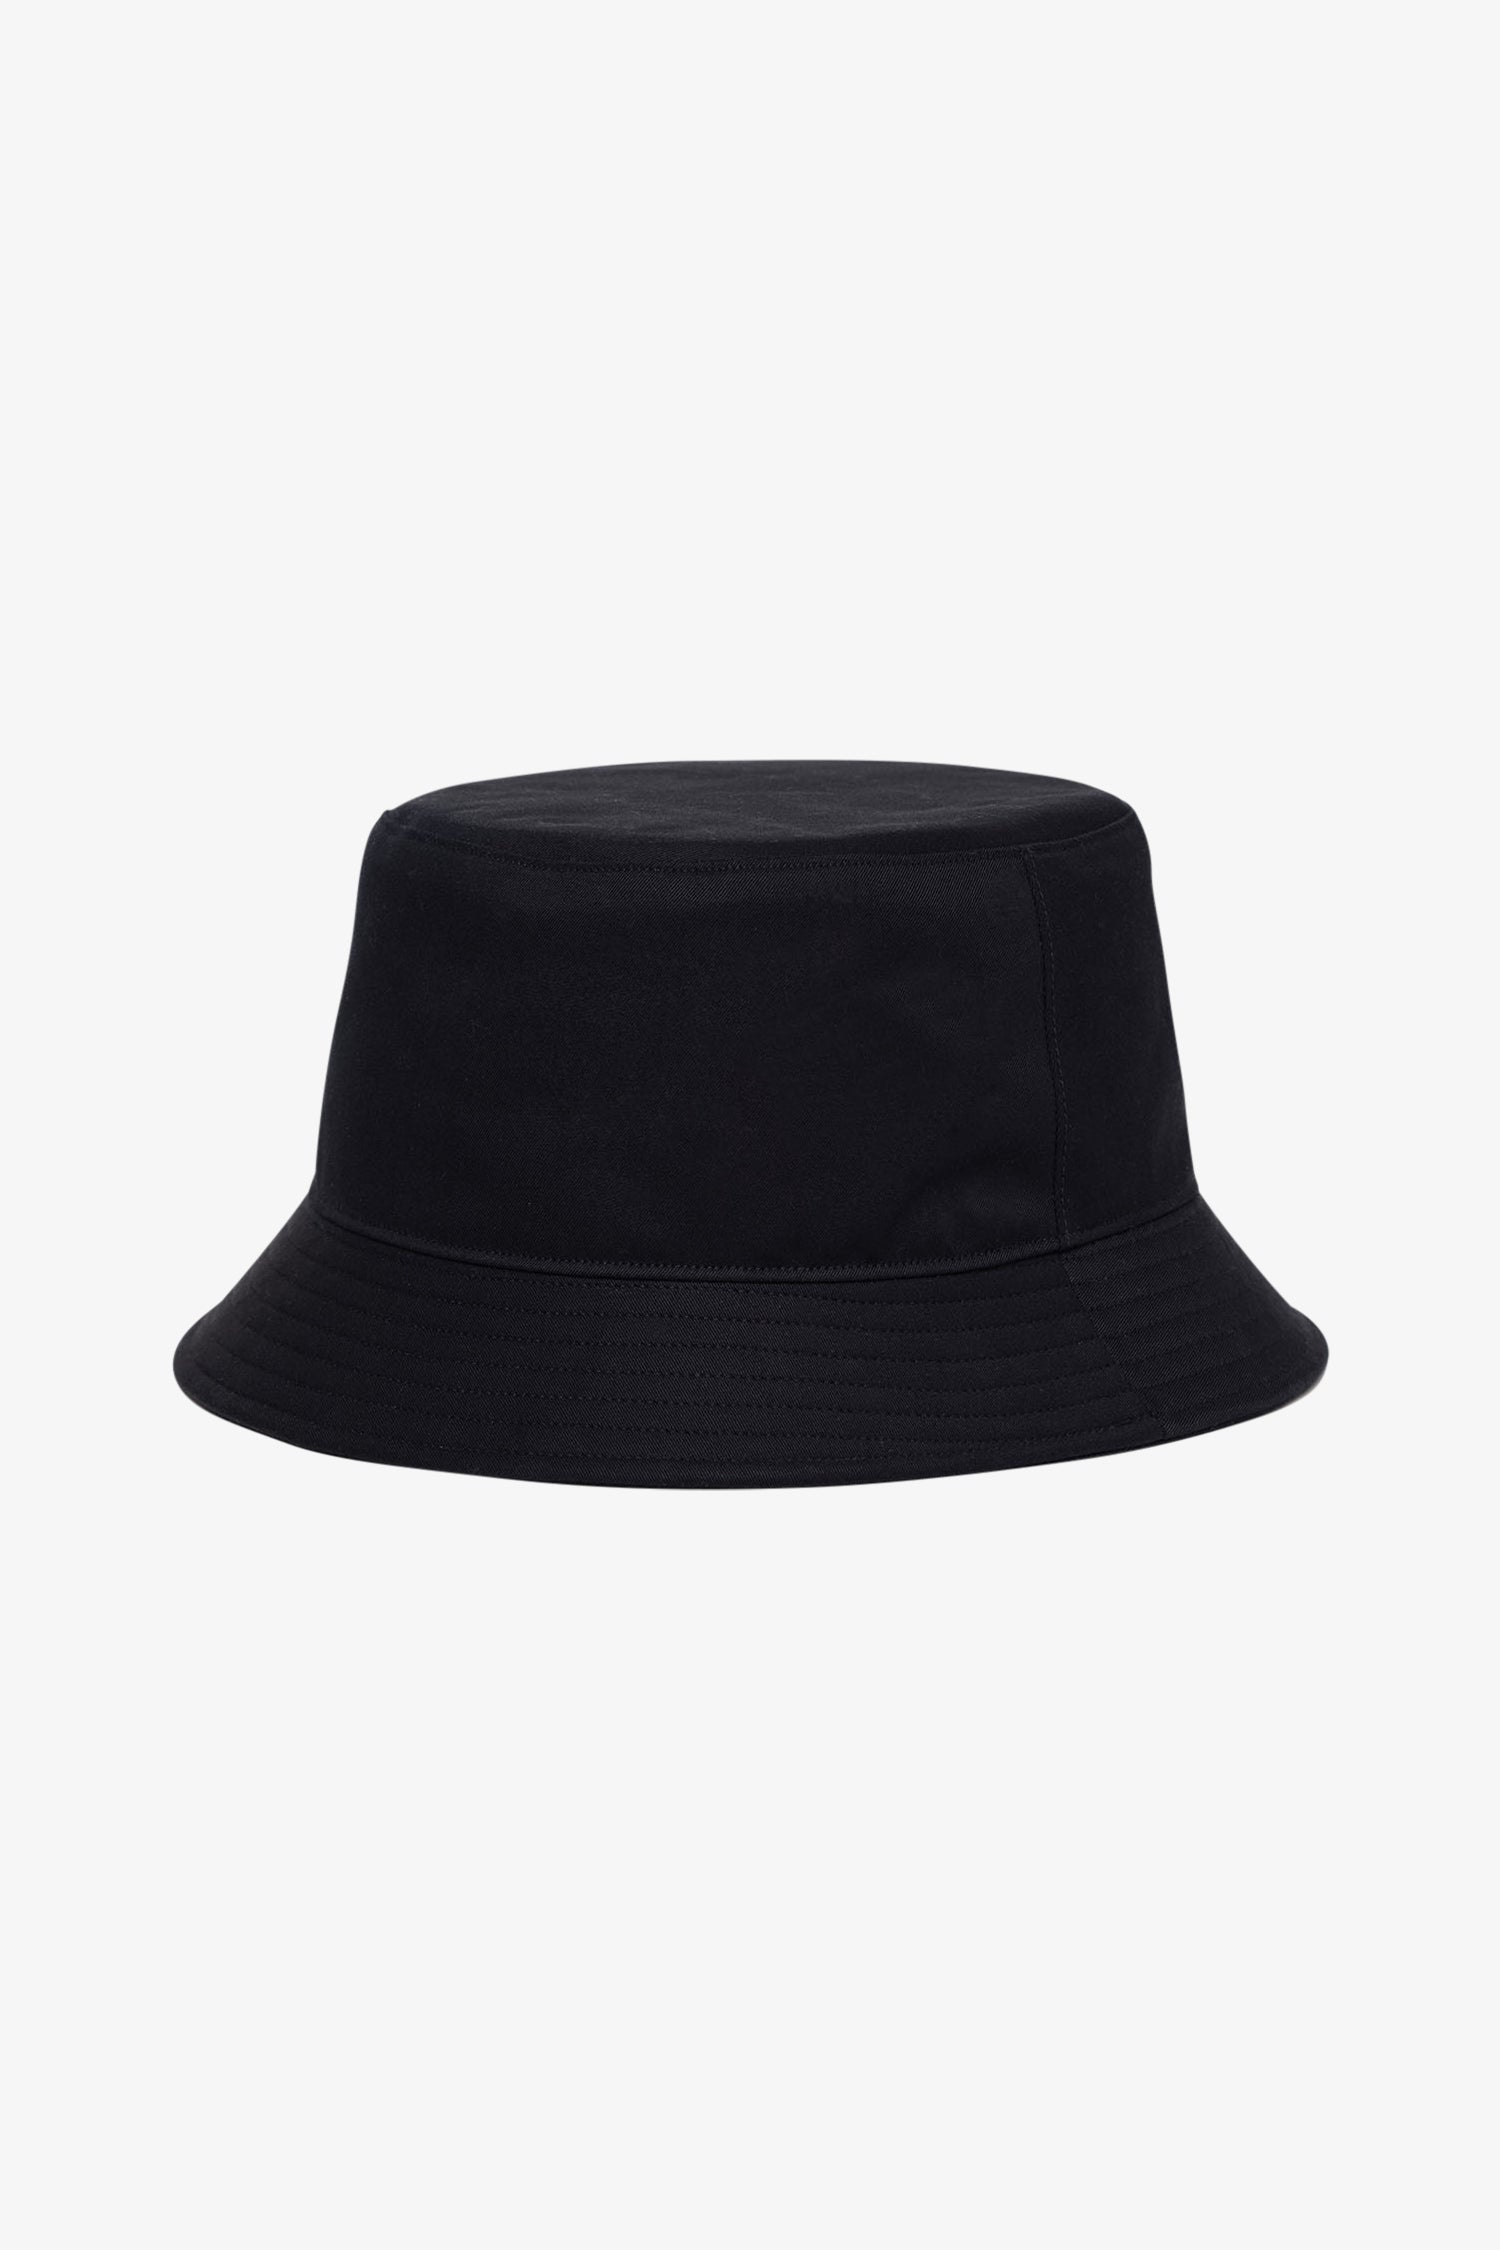 Selectshop FRAME - NANAMICA GORE-TEX Hat Accessories Dubai